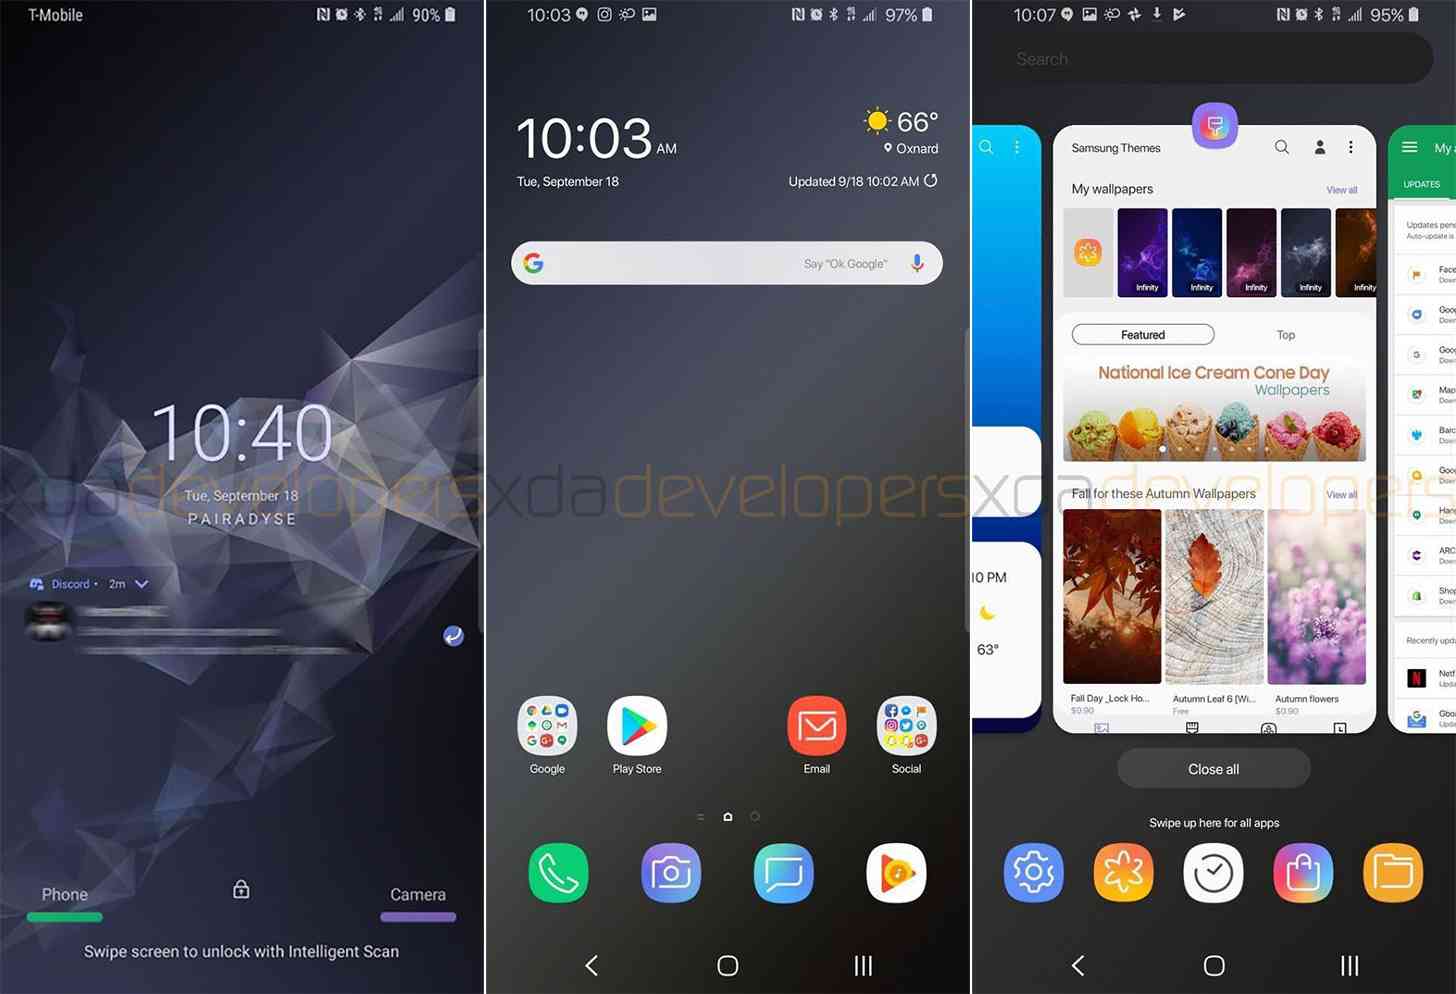 Samsung Galaxy S9+ Android 9 Pie screenshots leak